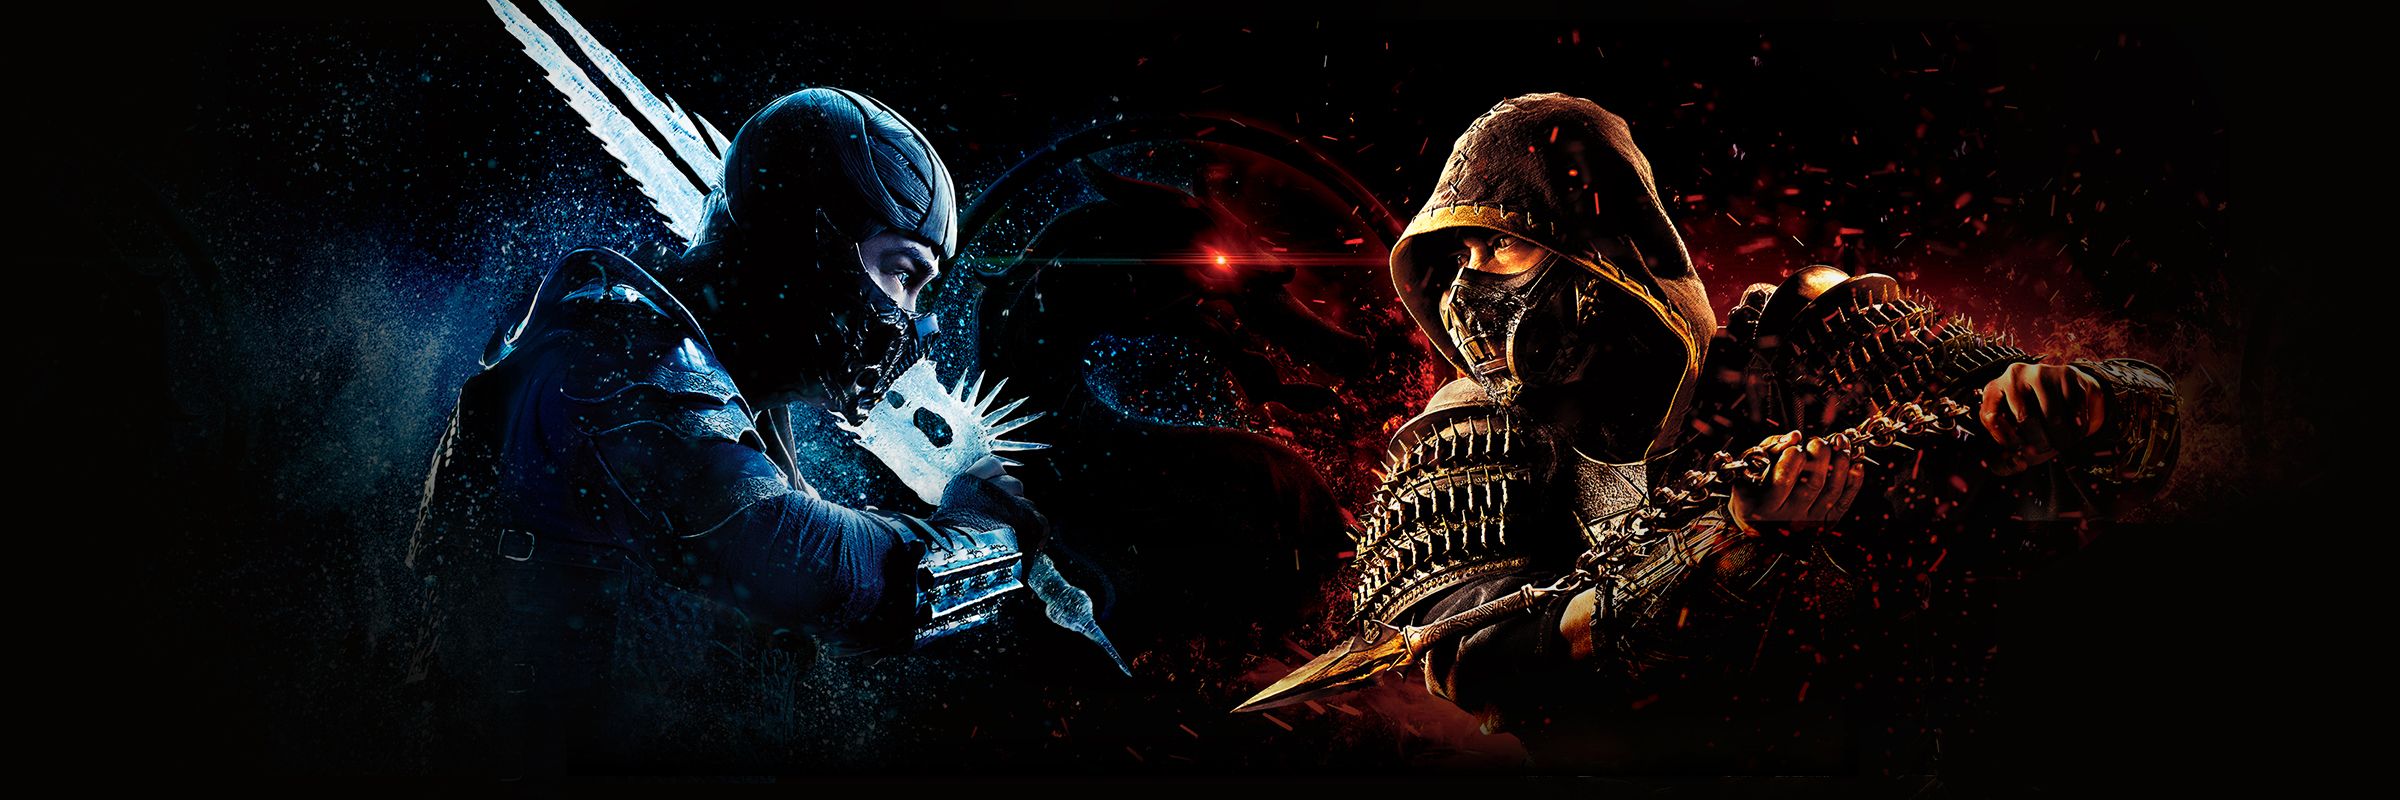 Mortal Kombat movie review & film summary (2021)